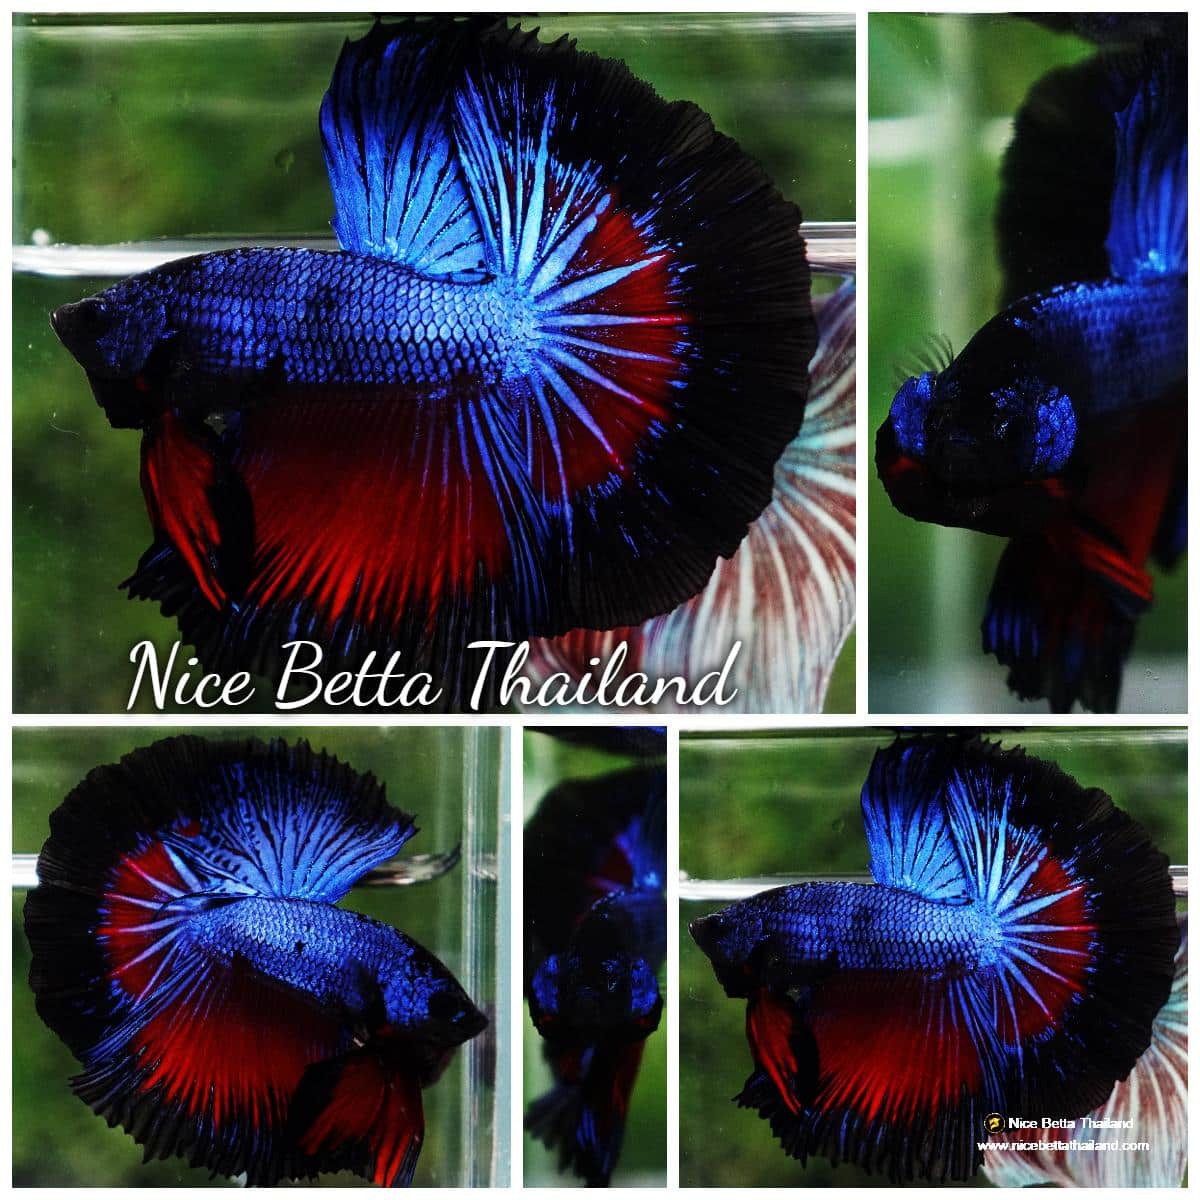 Betta fish Blue Dragon Black Ring HM